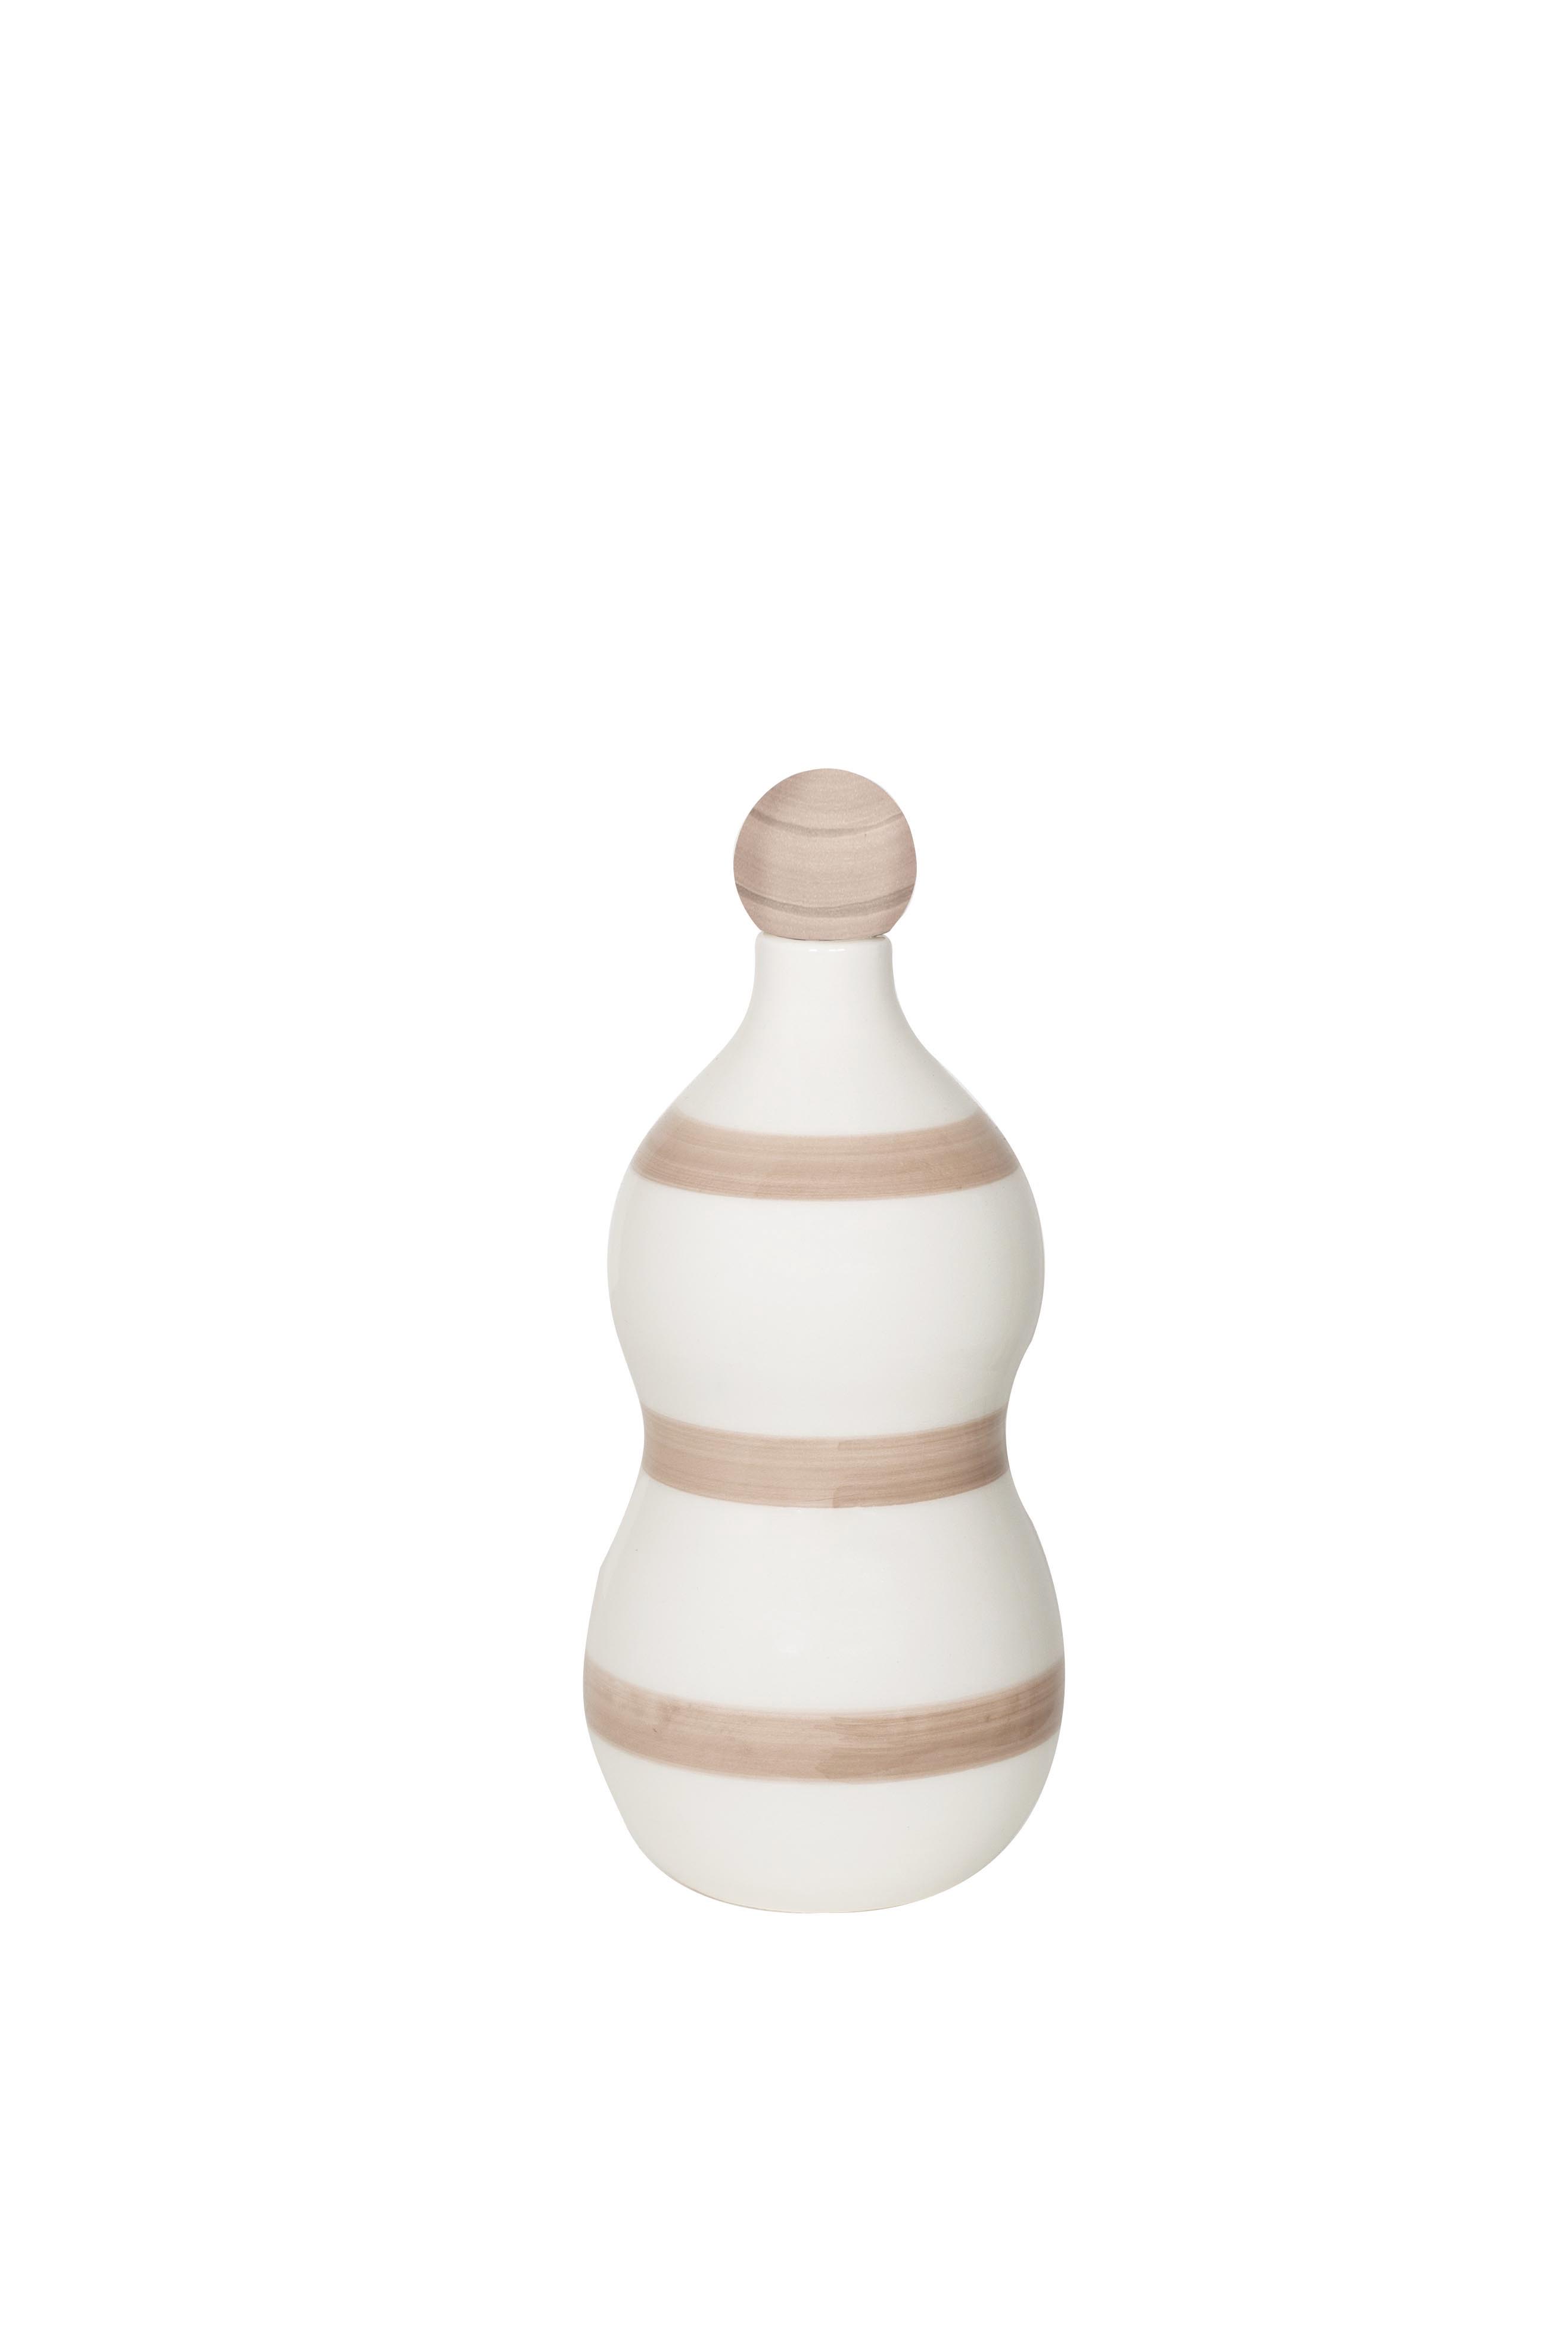 Zafferano Poldina Stopper Sabbia / Sand + Lido Keramik Flasche mit horizontalen Ringen in Creme